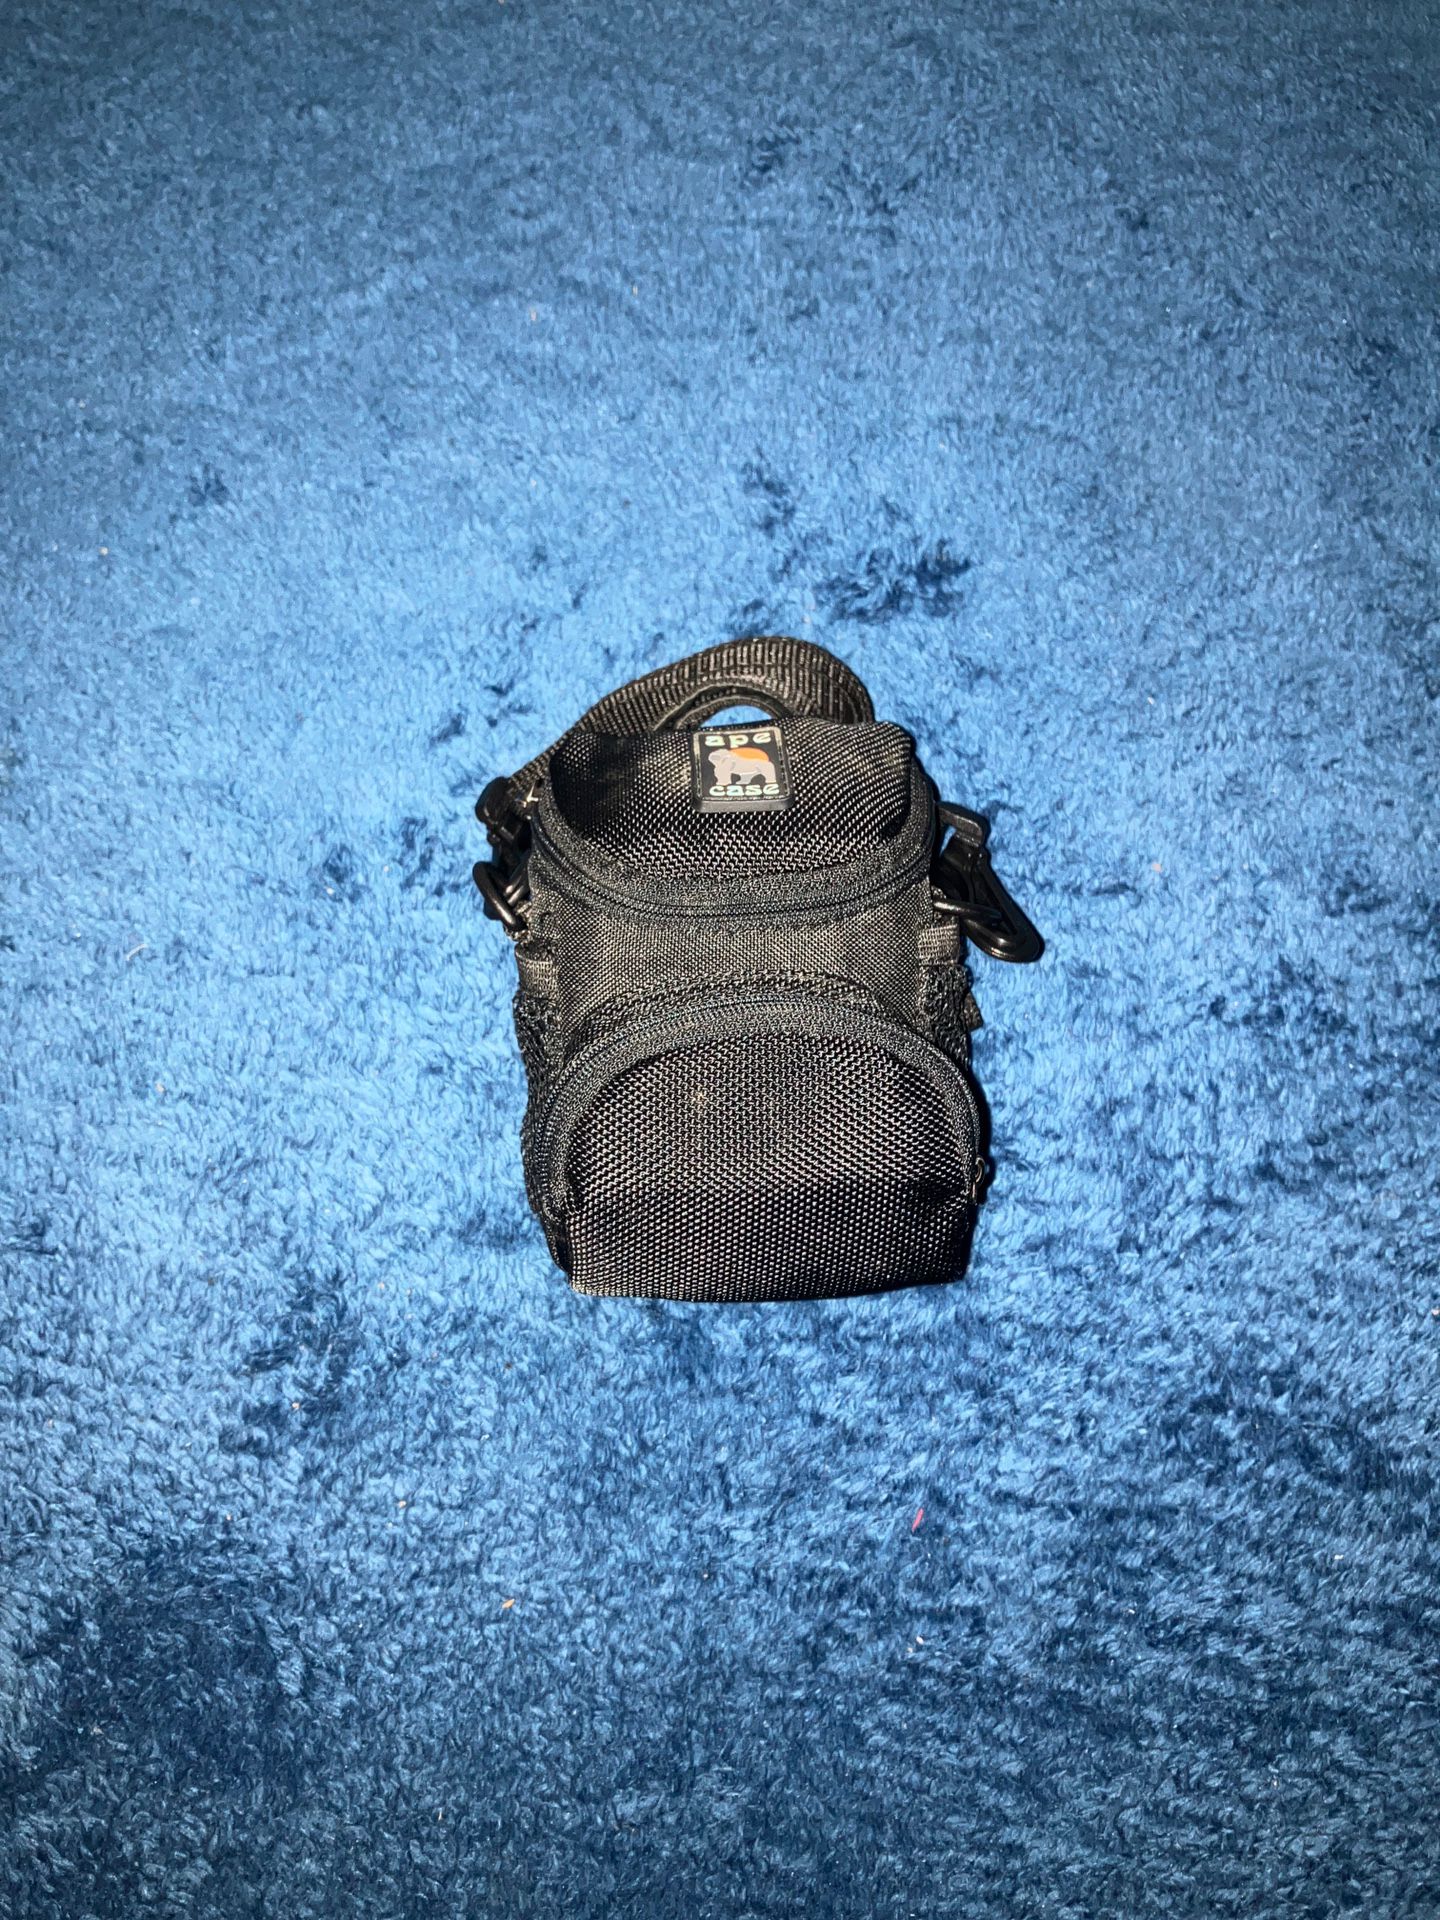 Norazza 6x4 Ape Camera Case Bag W/ Shoulder Strap & Front Zipper Pocket